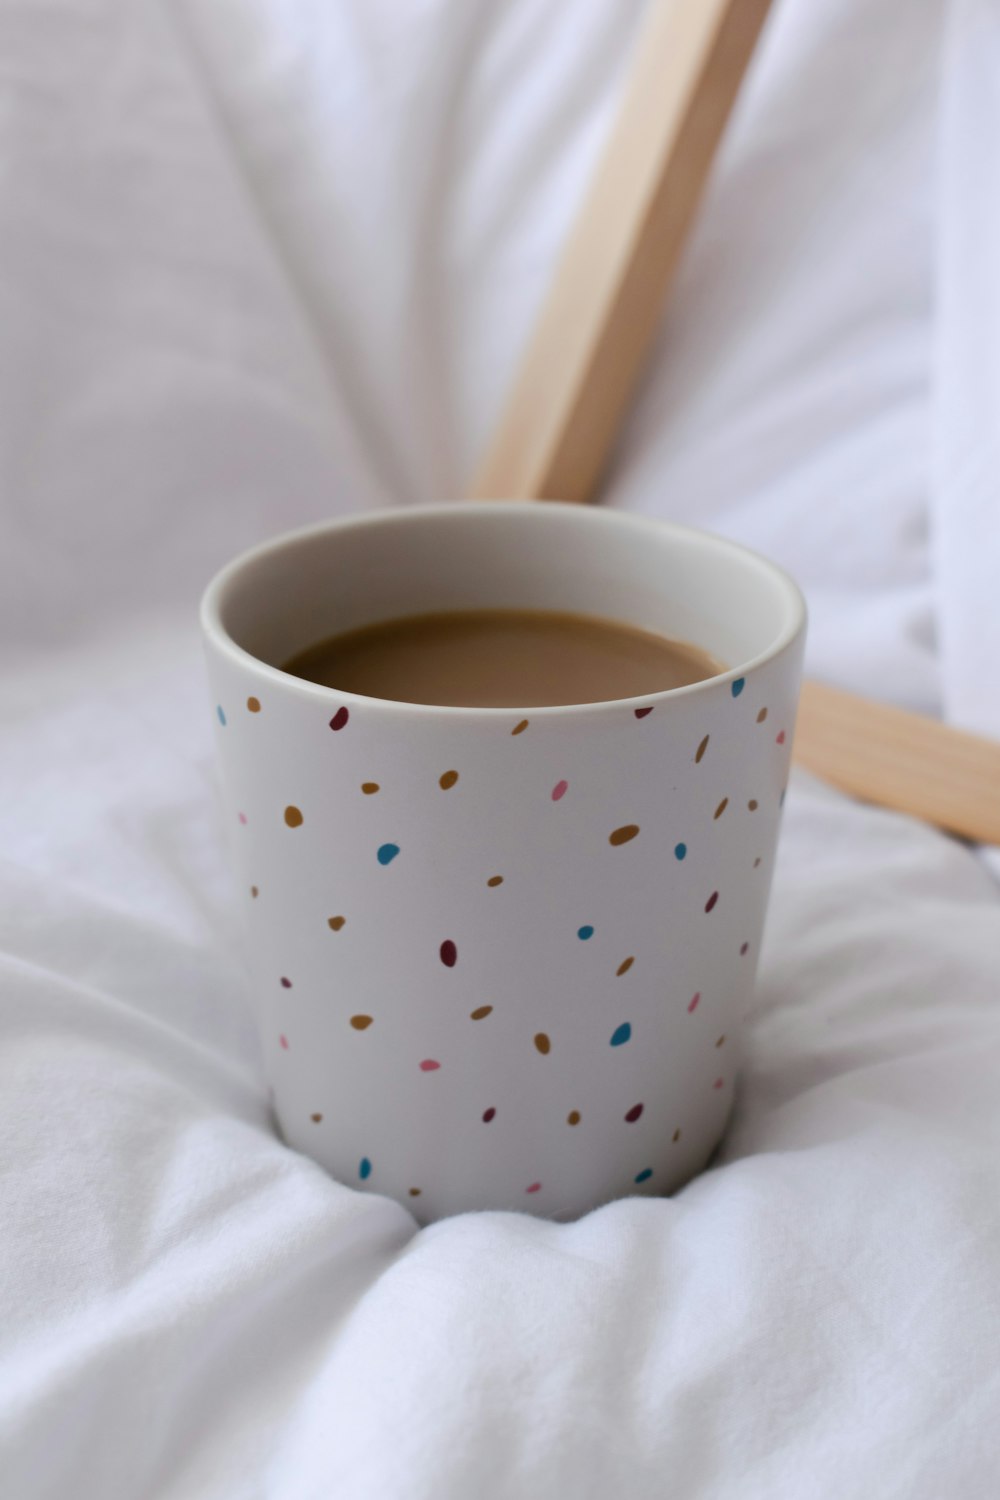 white and blue polka dot ceramic mug on white textile